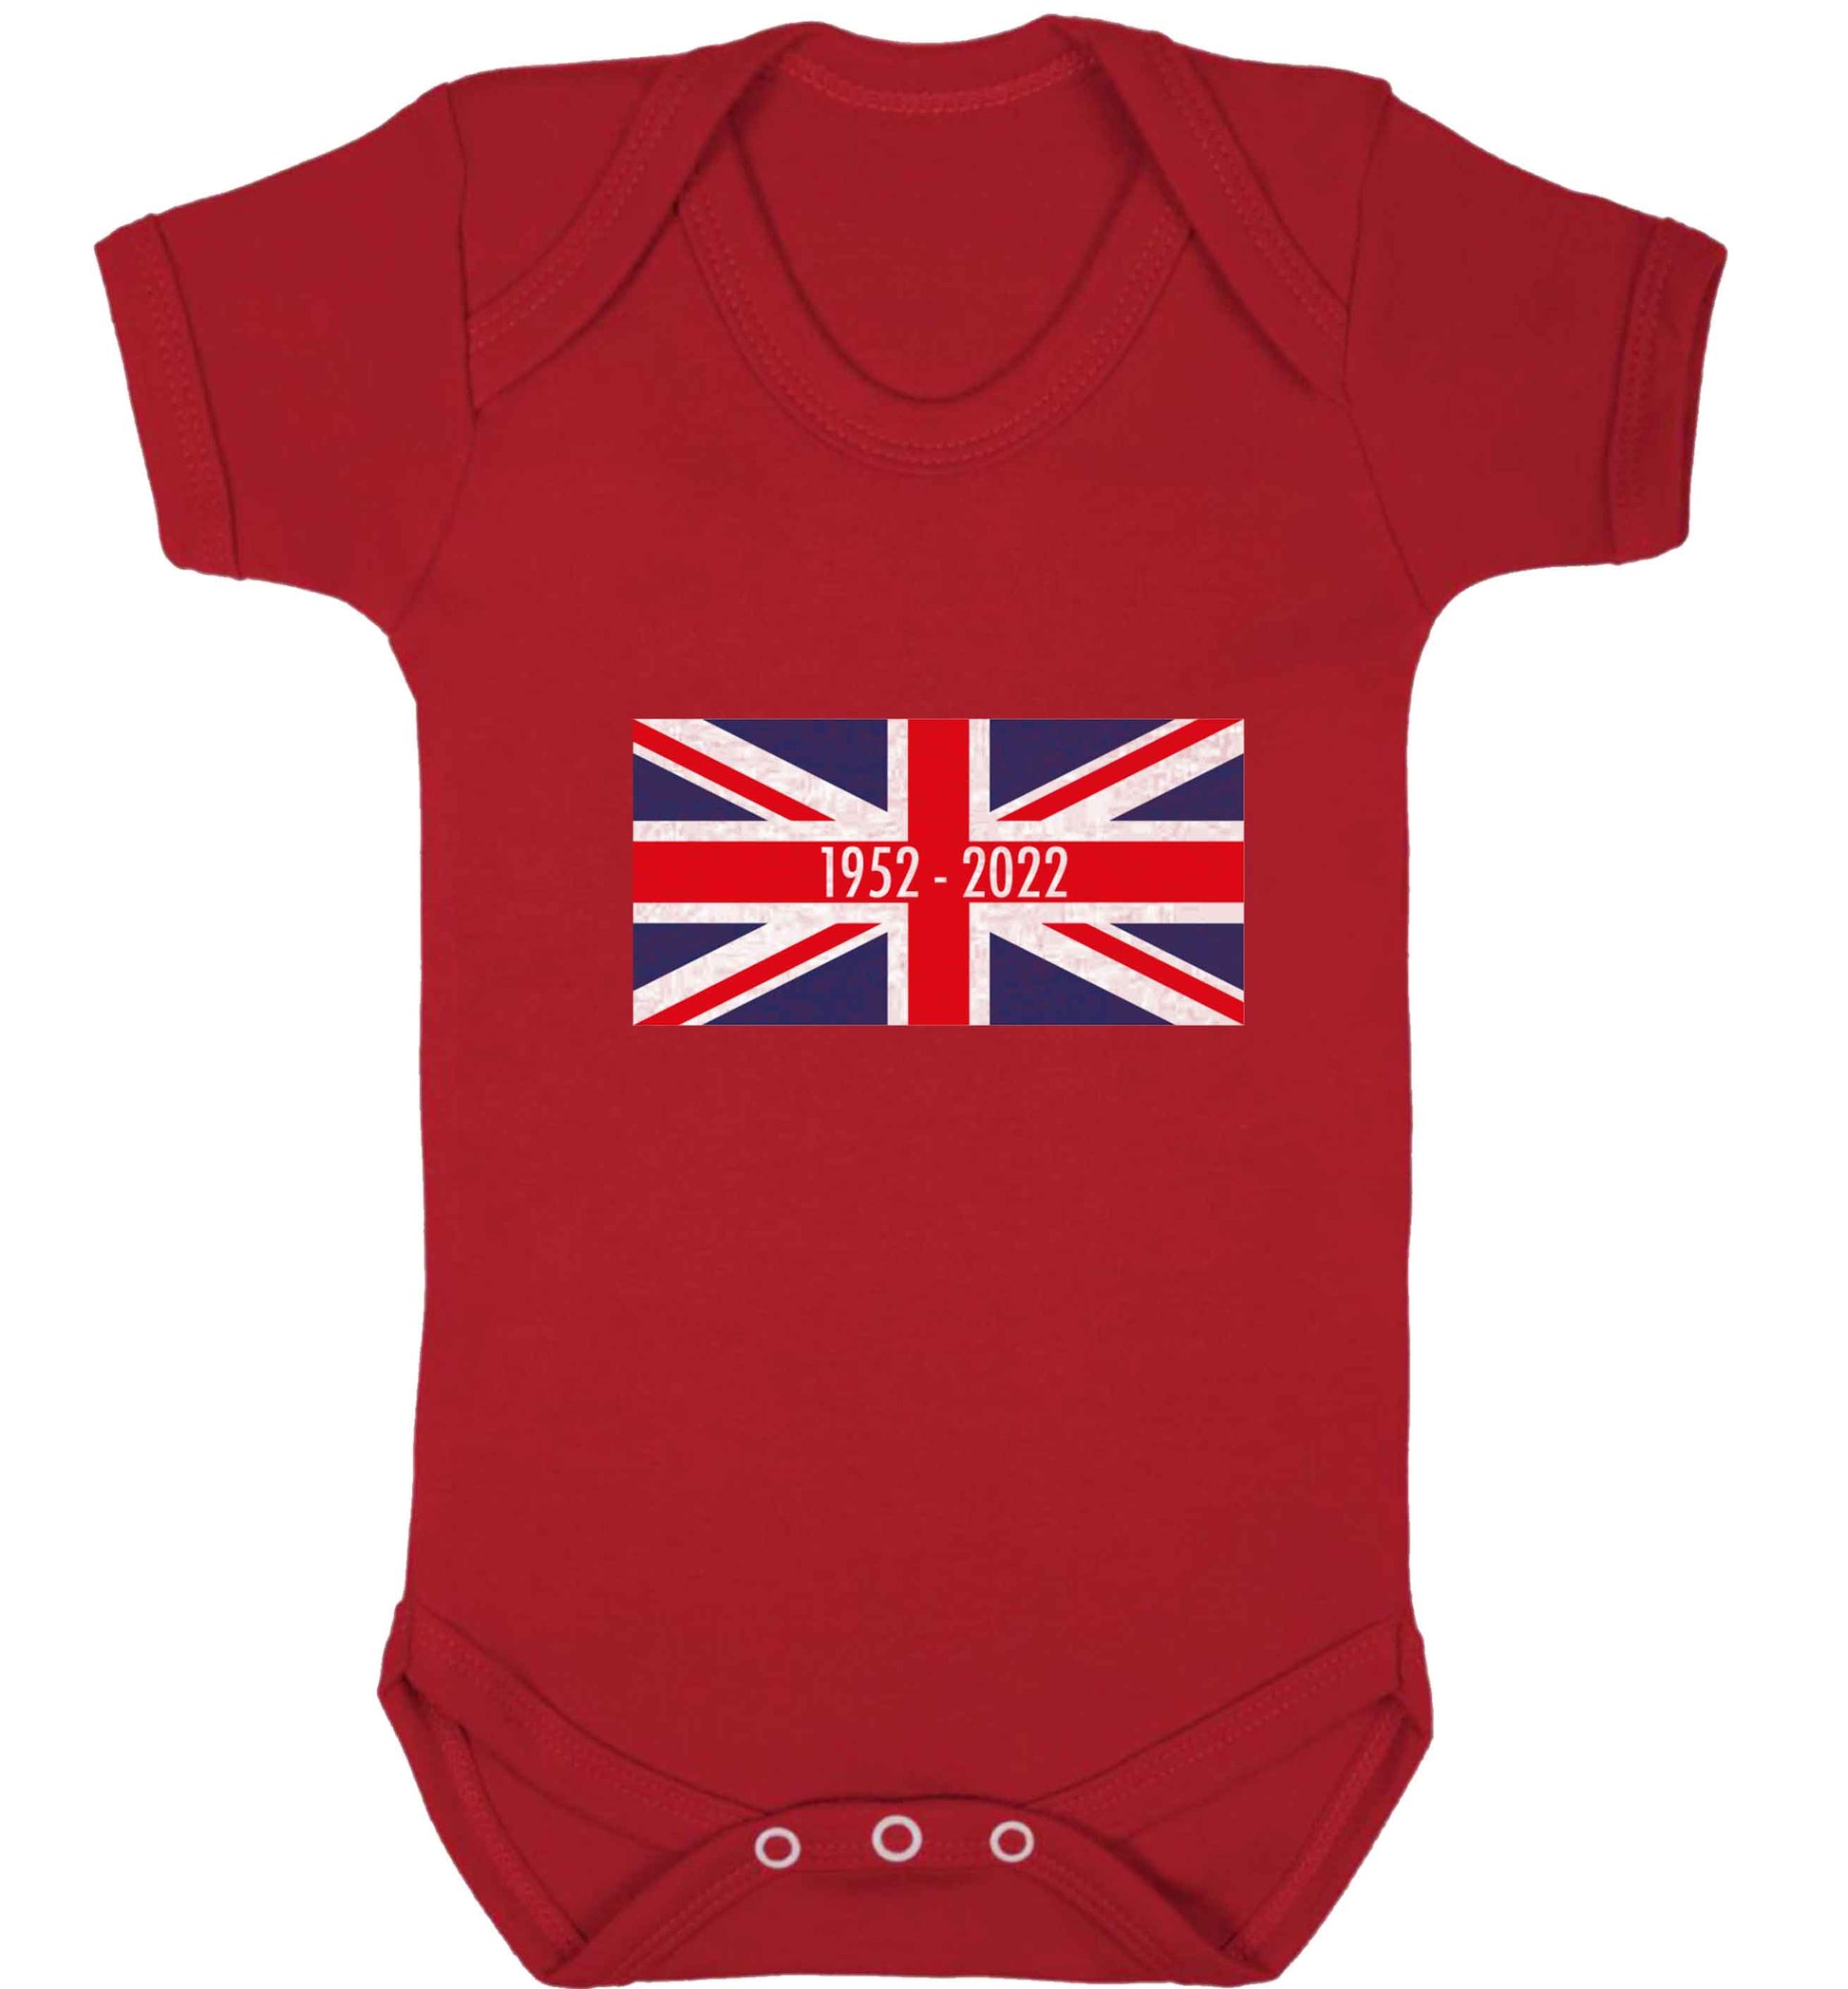 British flag Queens jubilee baby vest red 18-24 months